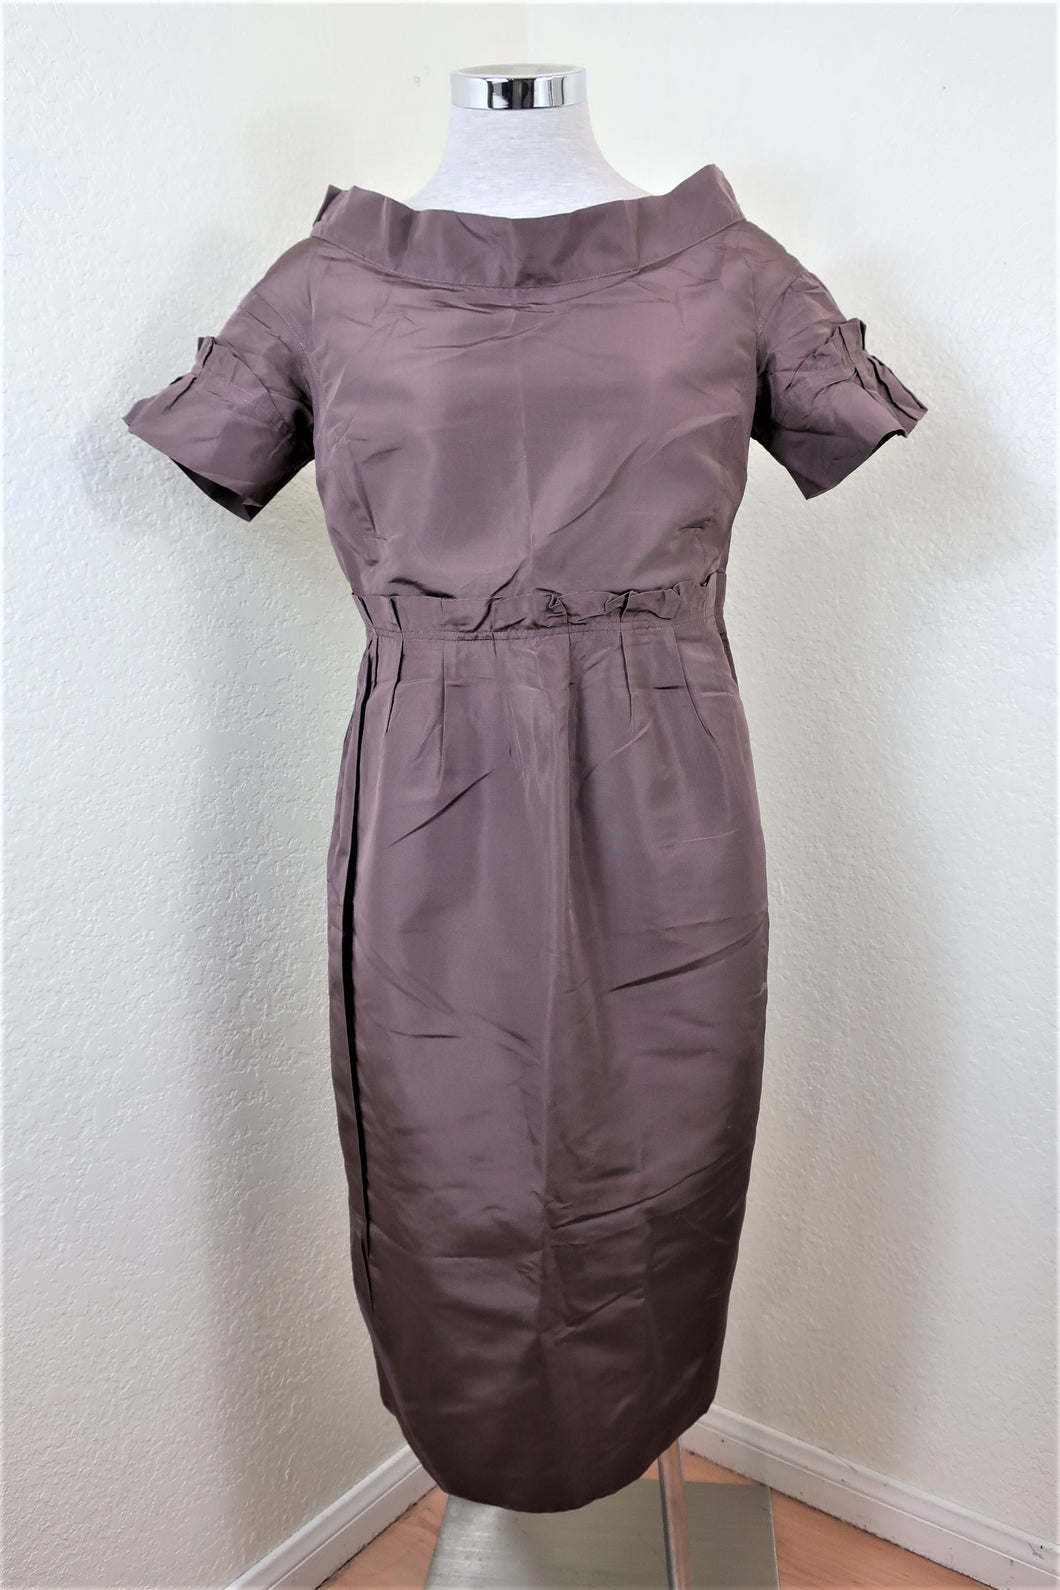 BURBERRY Old Rose Sheath Dress Short SLeeves Dress 40 4 5 6 Small